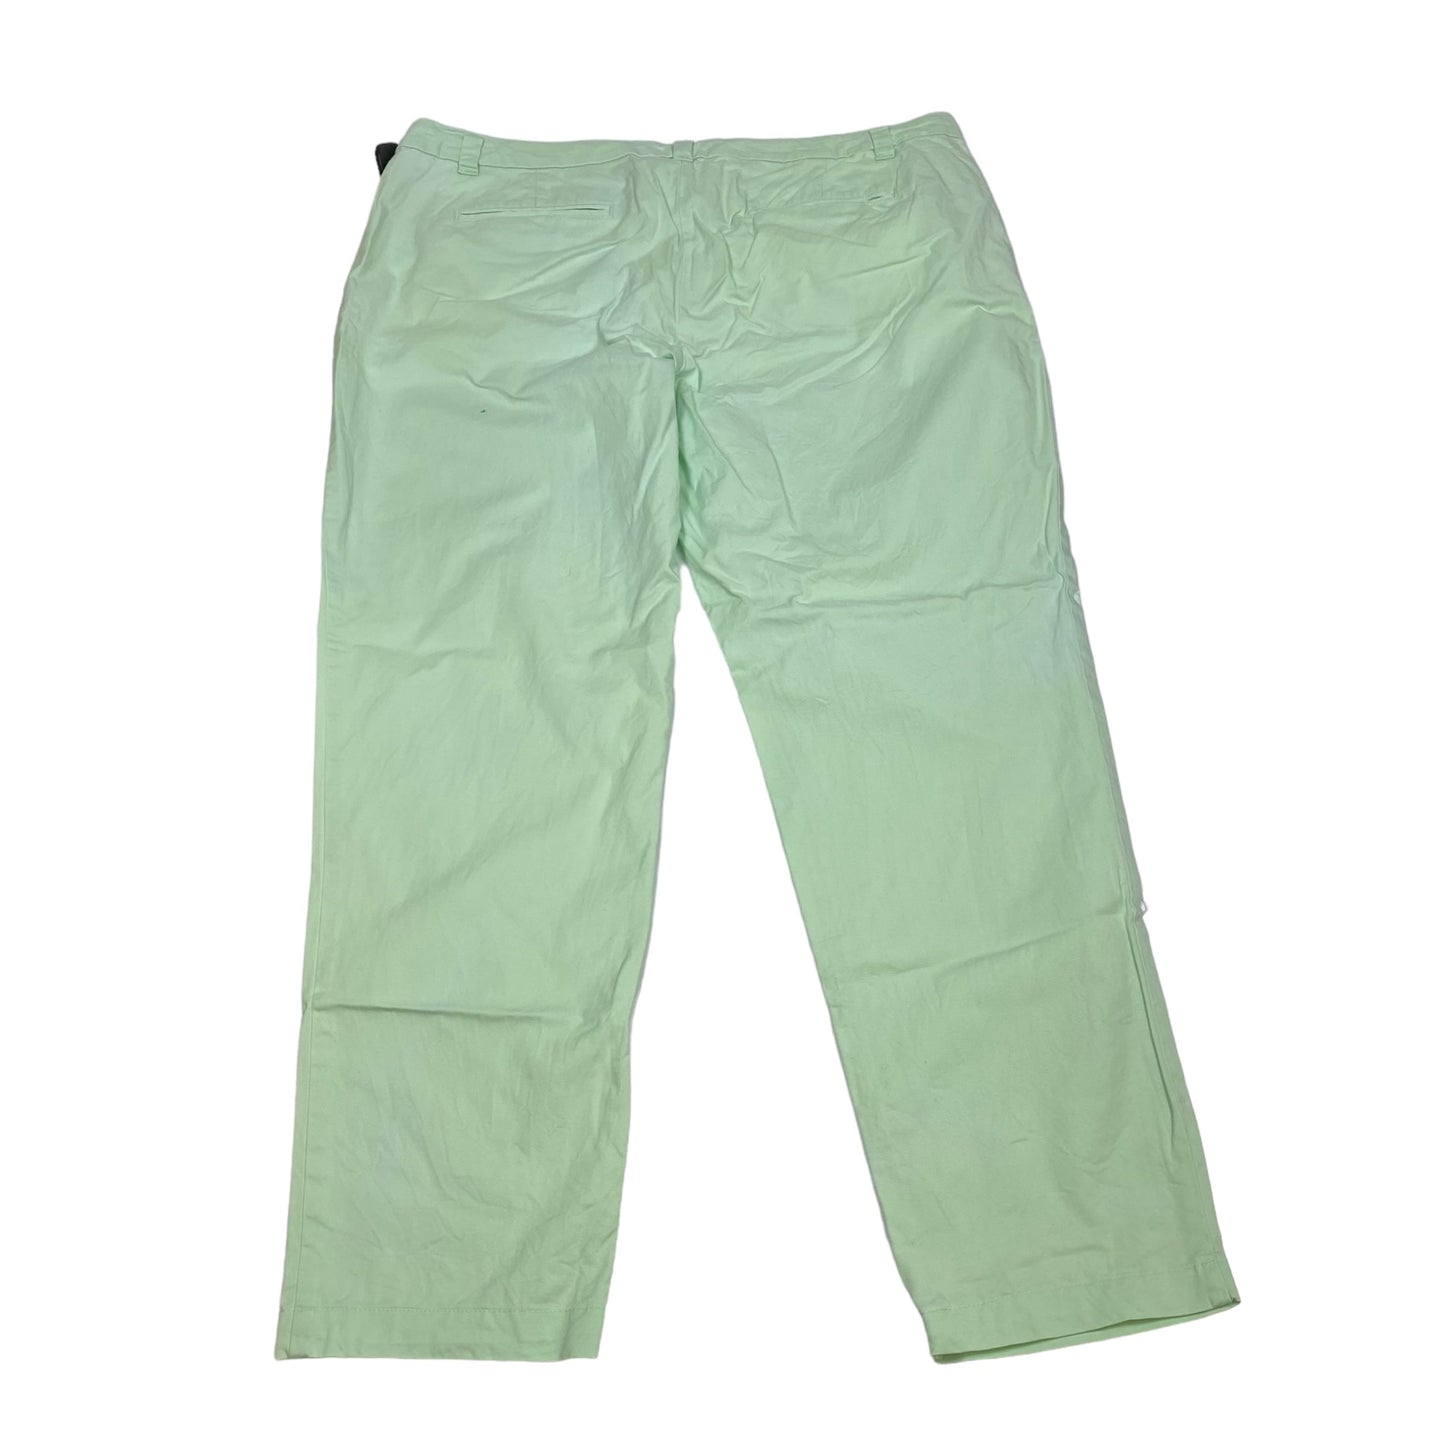 Green Pants Chinos & Khakis Gap, Size 18